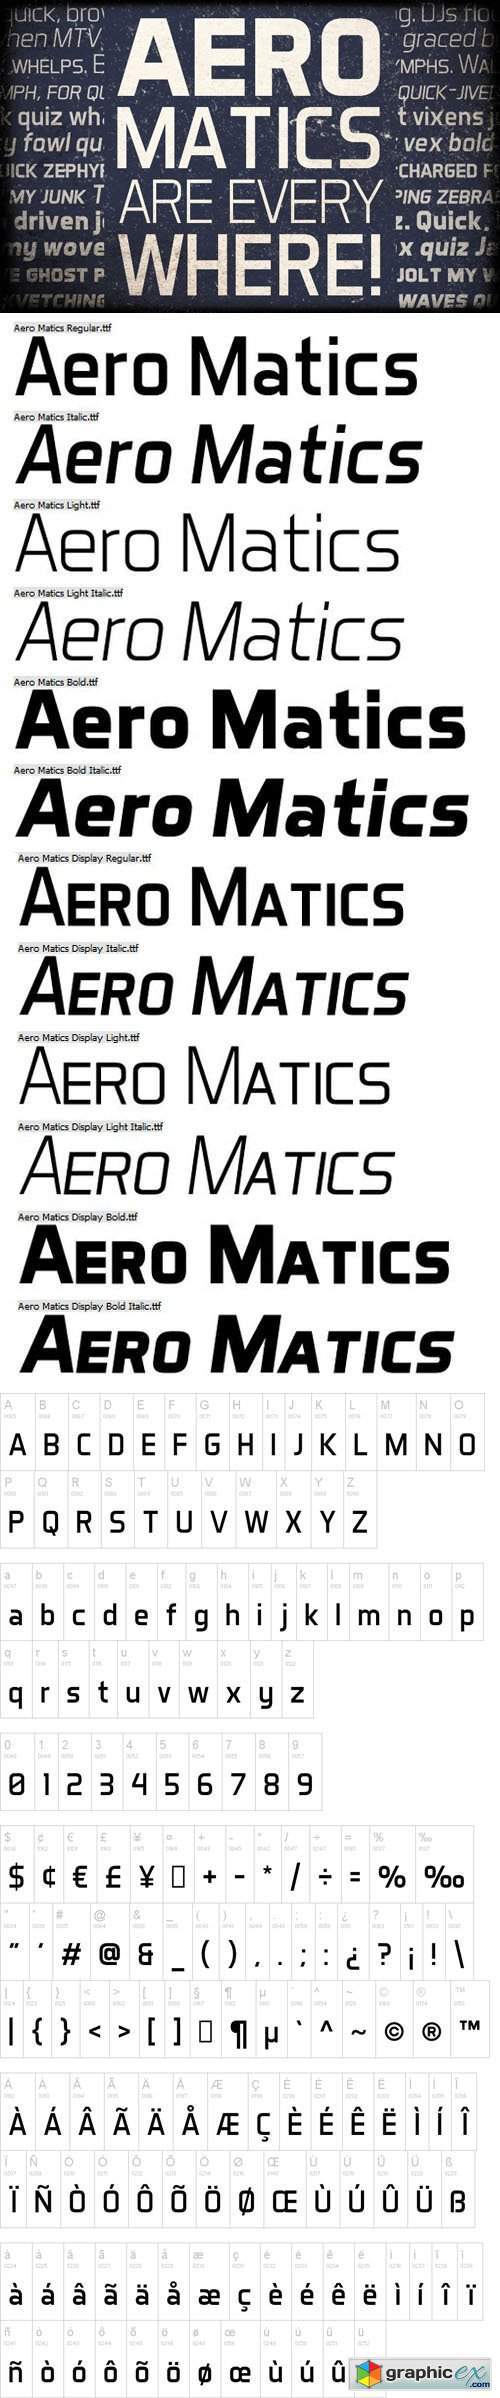 Aero Matics Font [12-Weights]